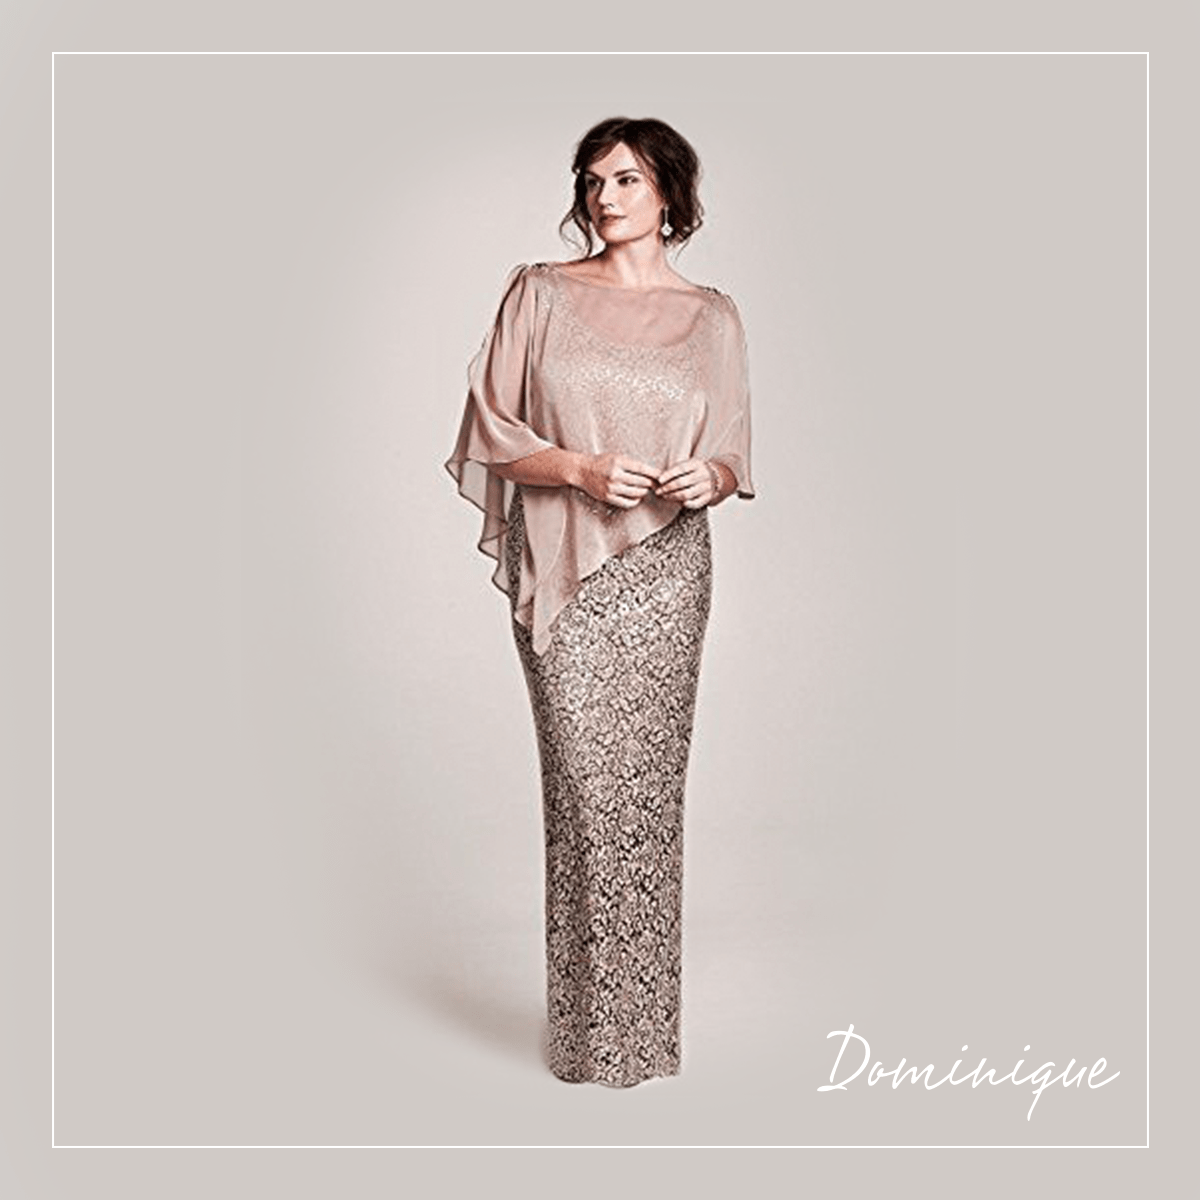 Dominique - Truques de moda